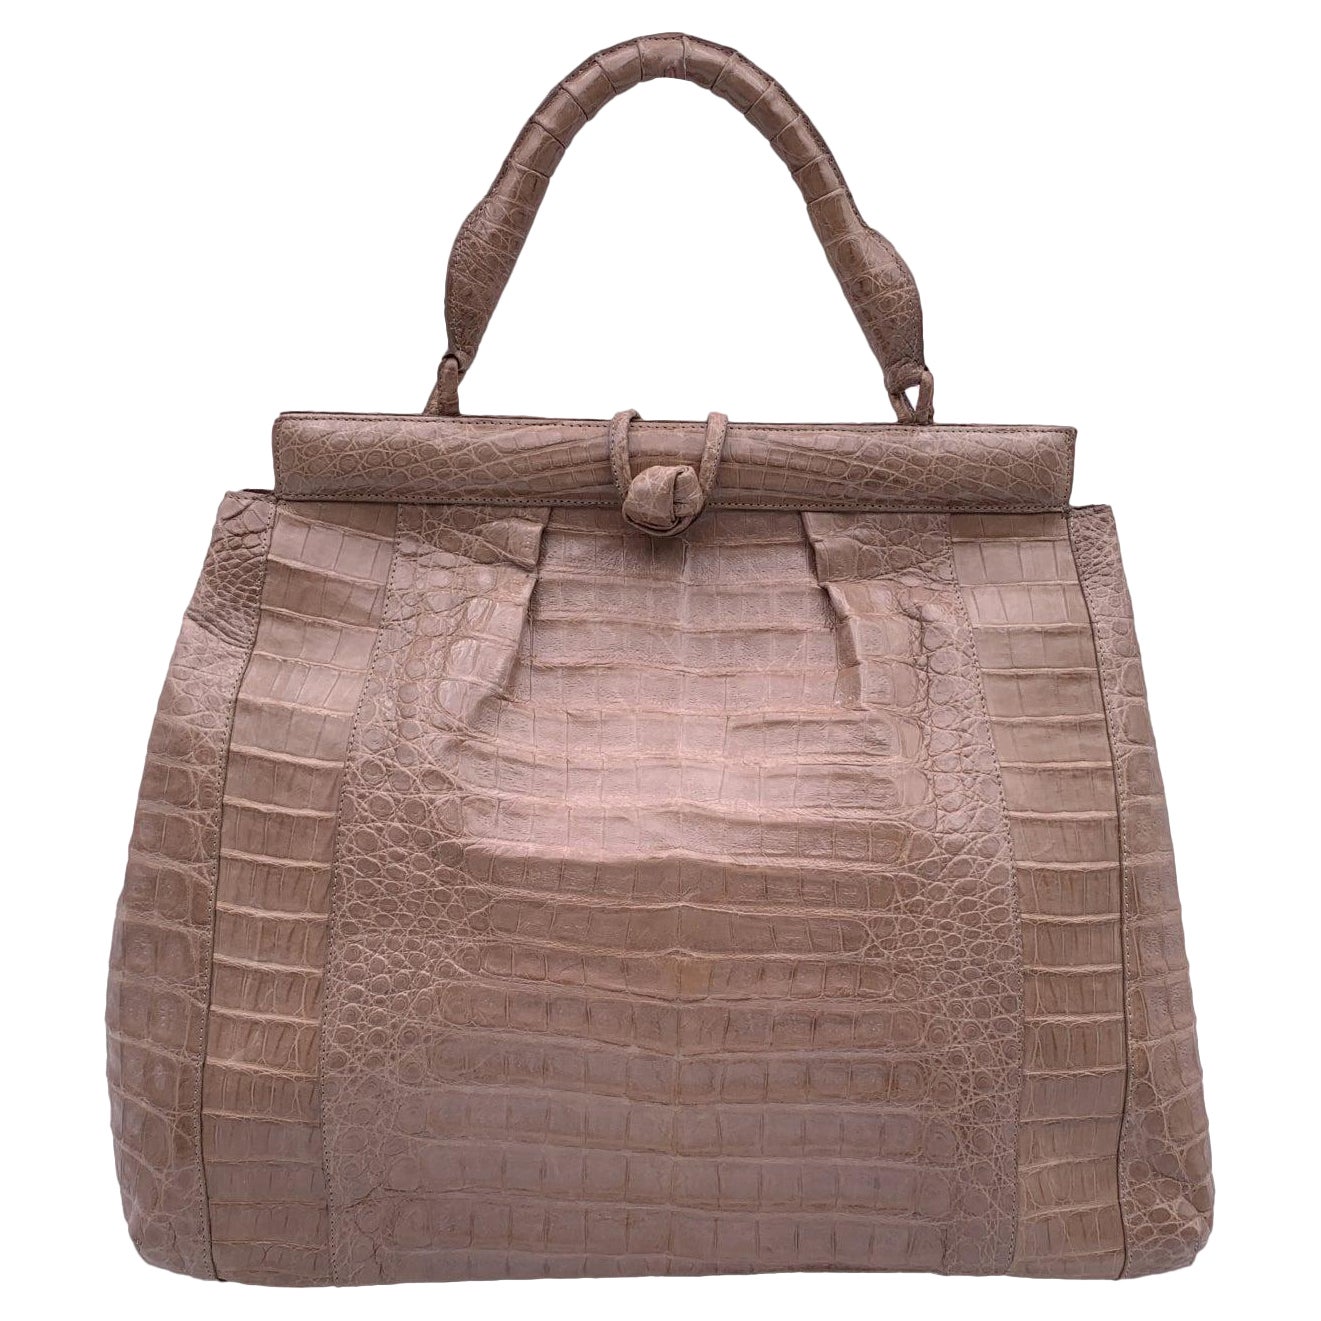 Nancy Gonzales Taupe Beige Leather Satchel Handbag Top Handle Bag For Sale